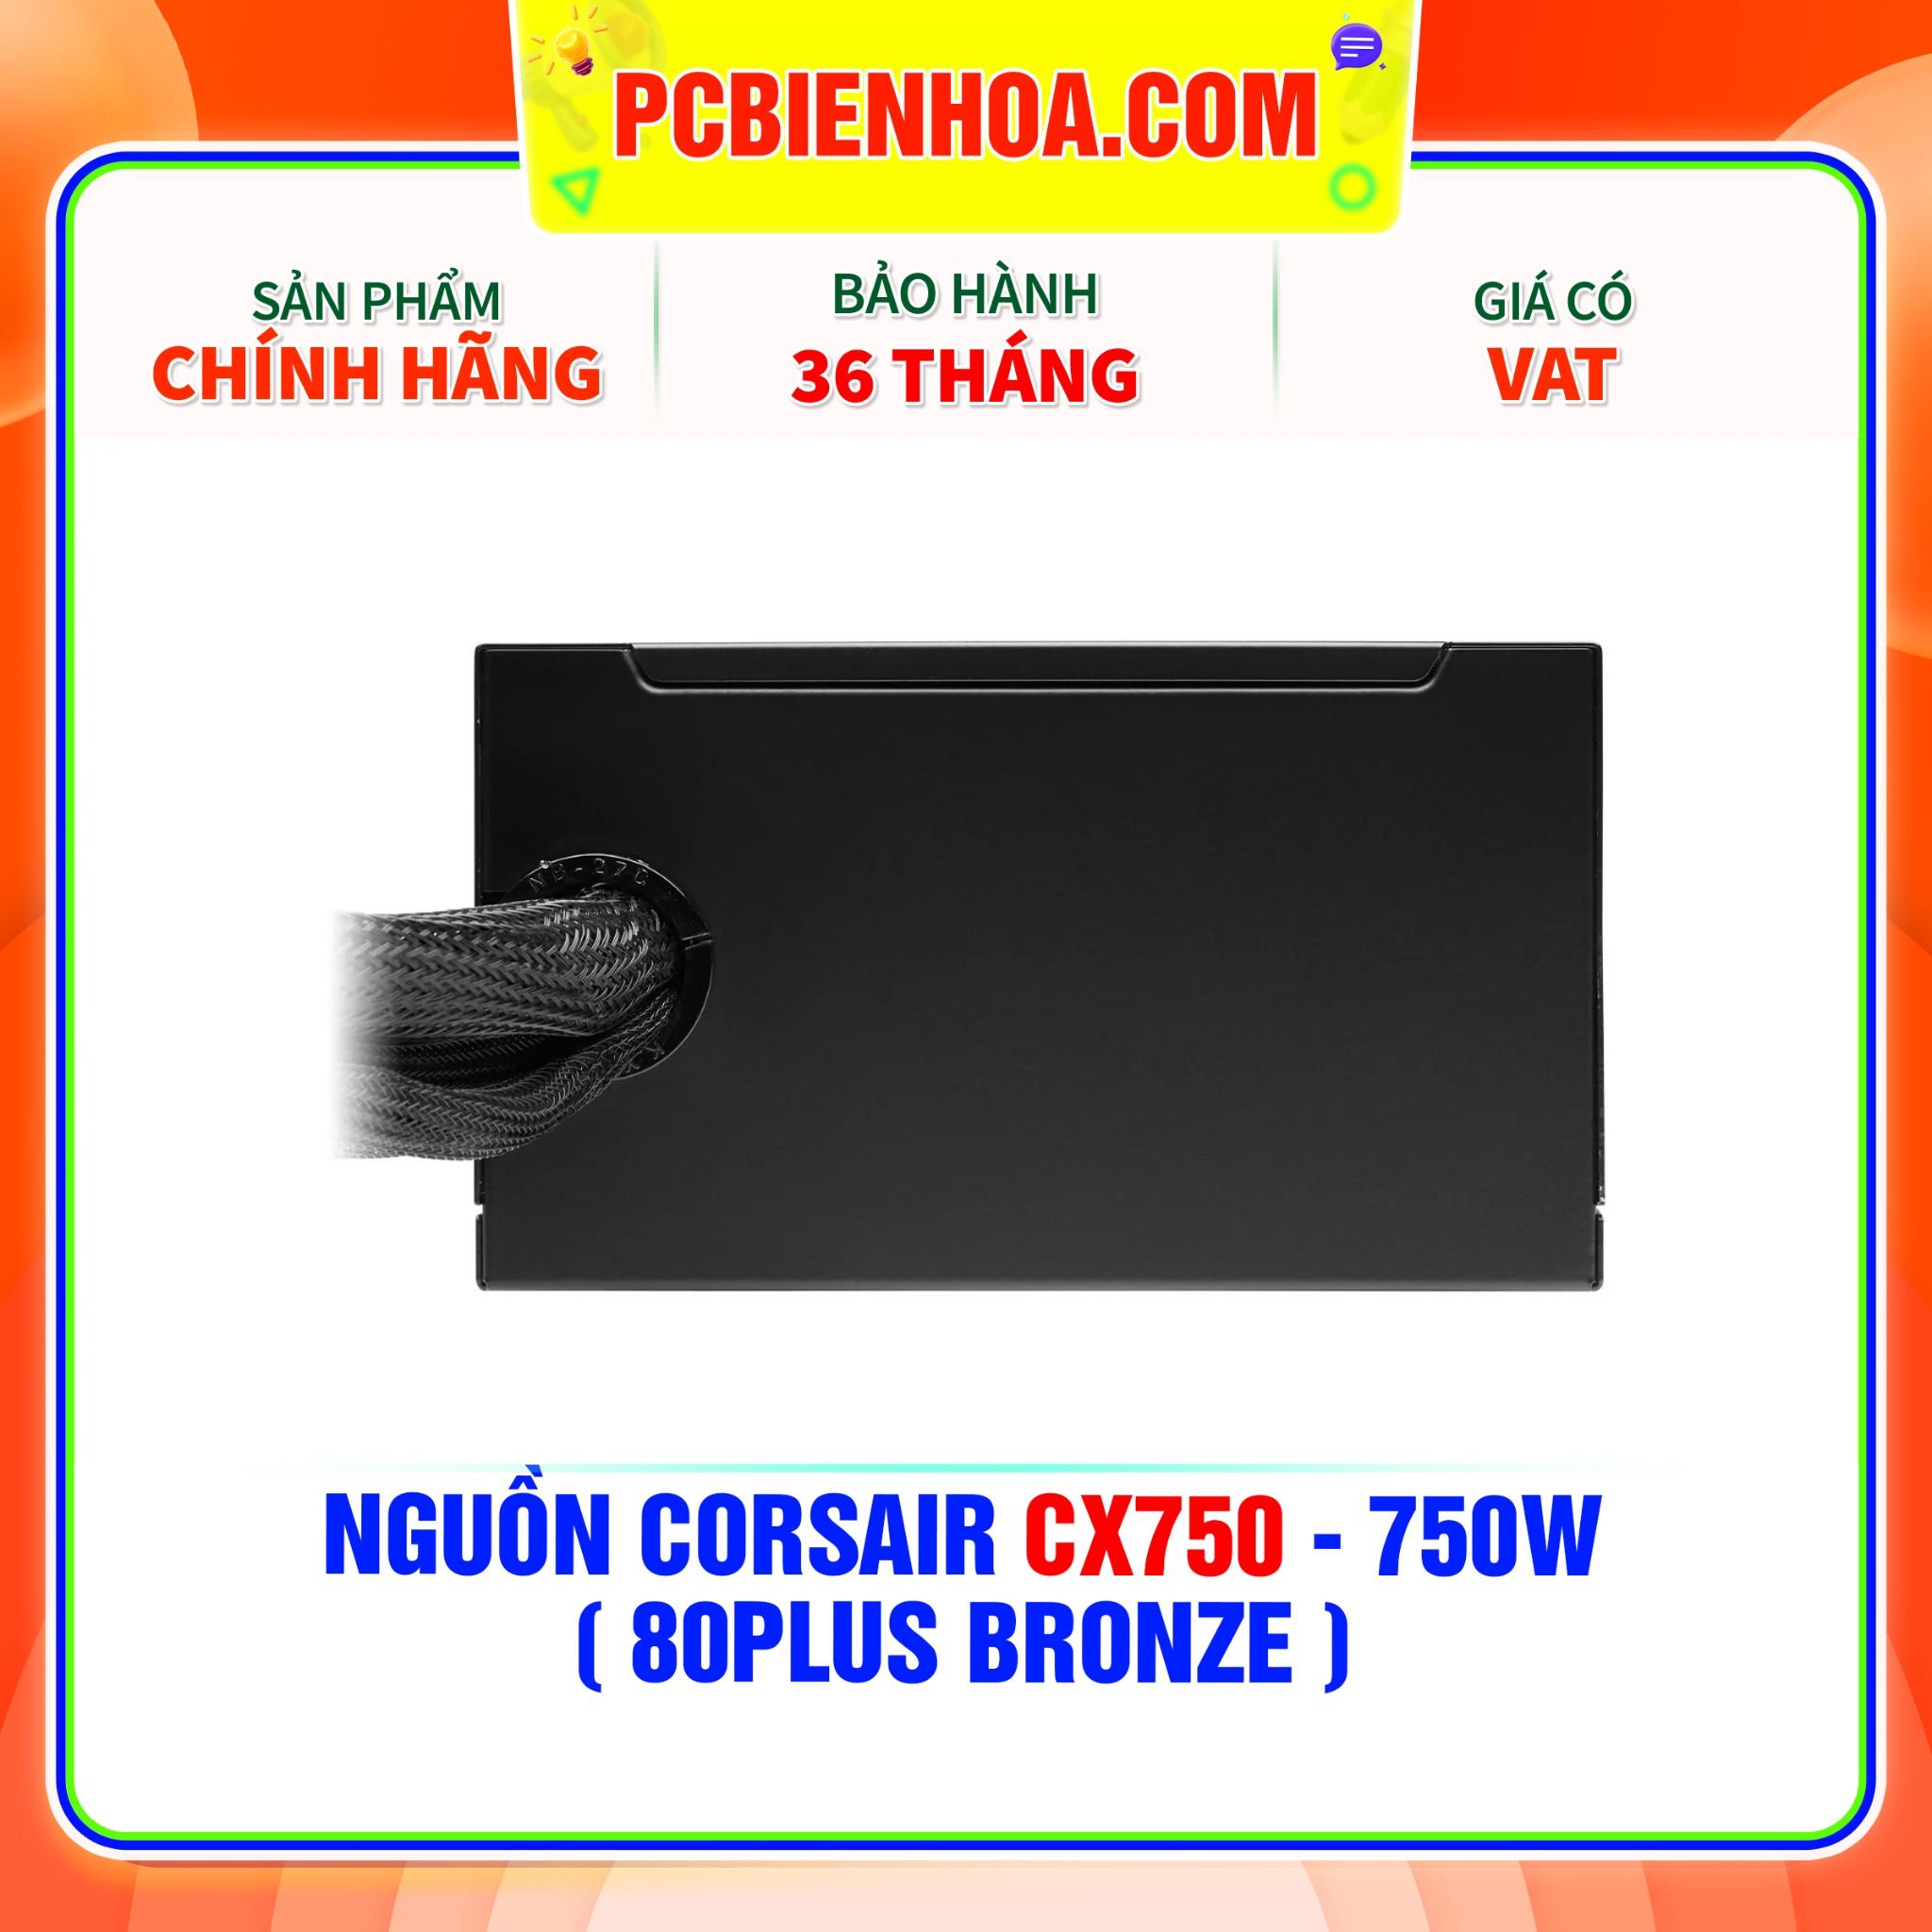  NGUỒN CORSAIR CX750 - 750W ( 80PLUS BRONZE ) 